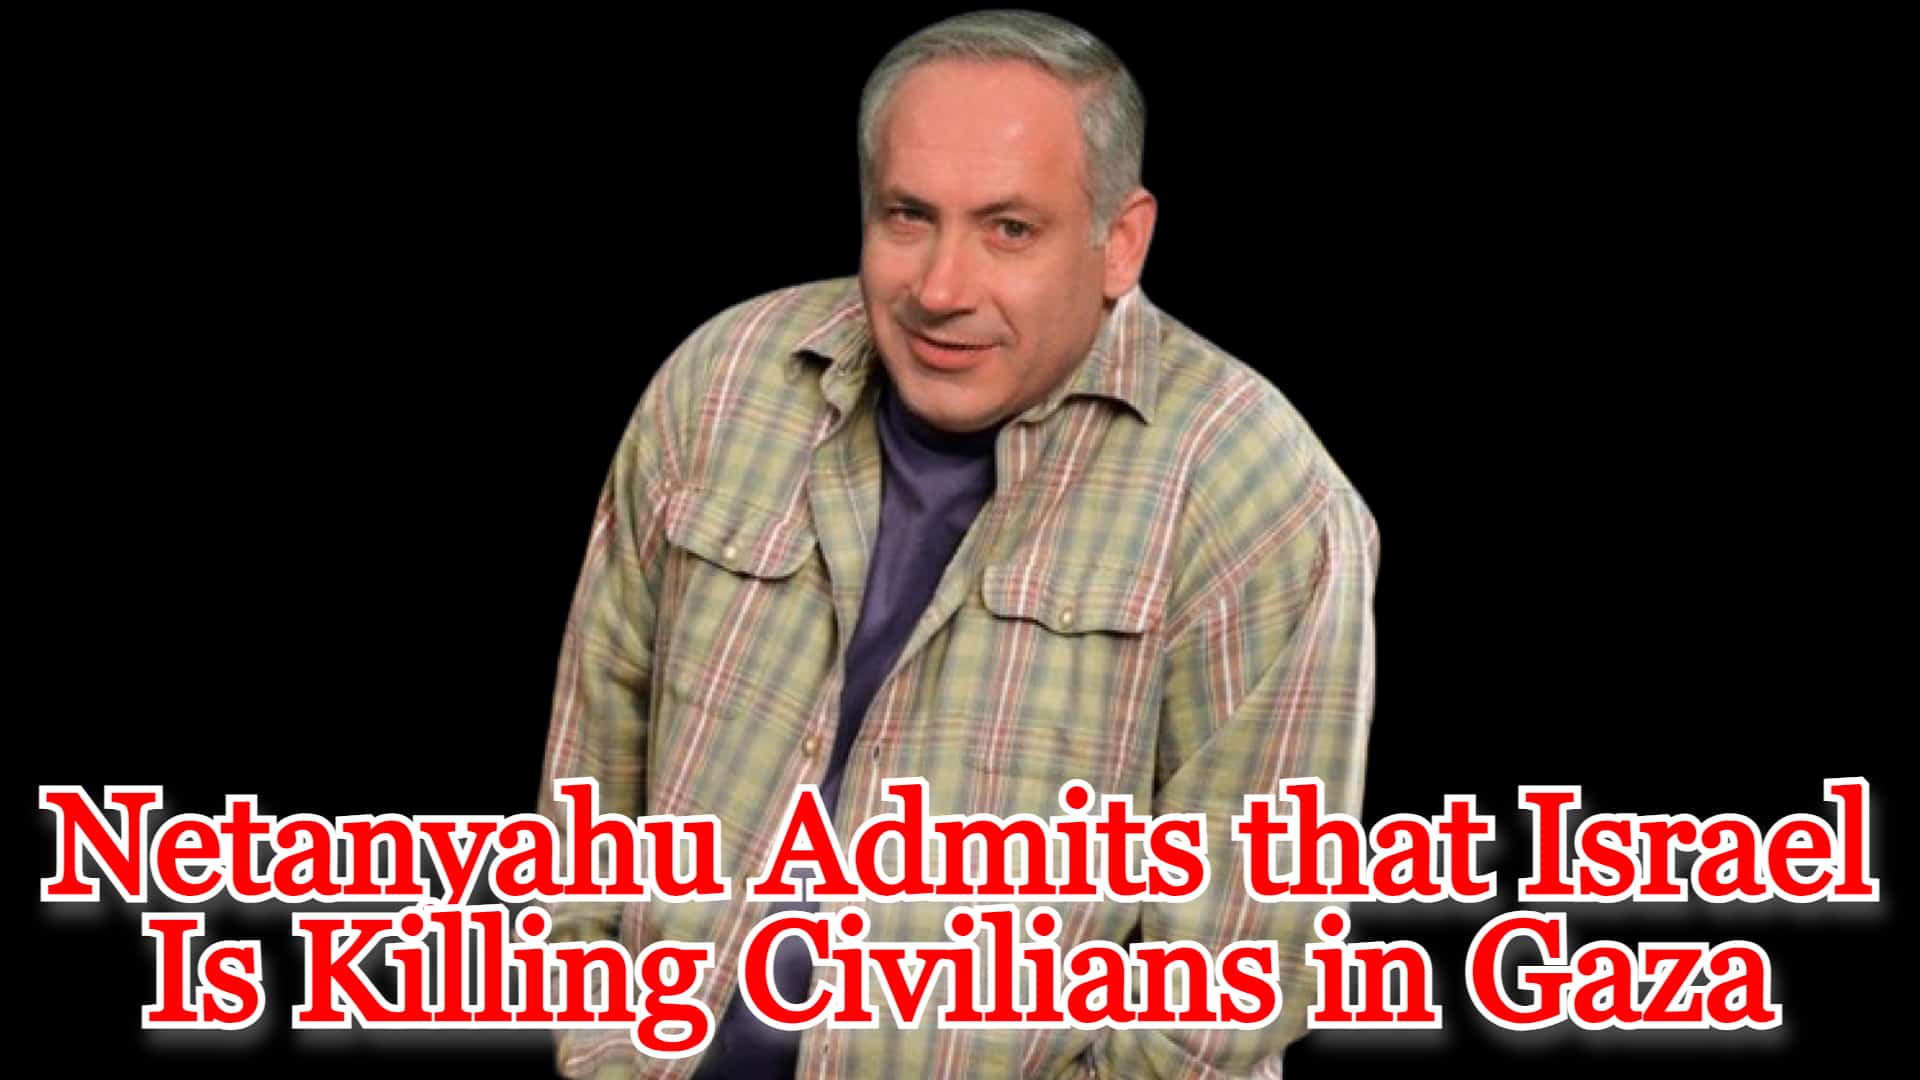 COI #501: Netanyahu Admits that Israel Is Killing Civilians in Gaza